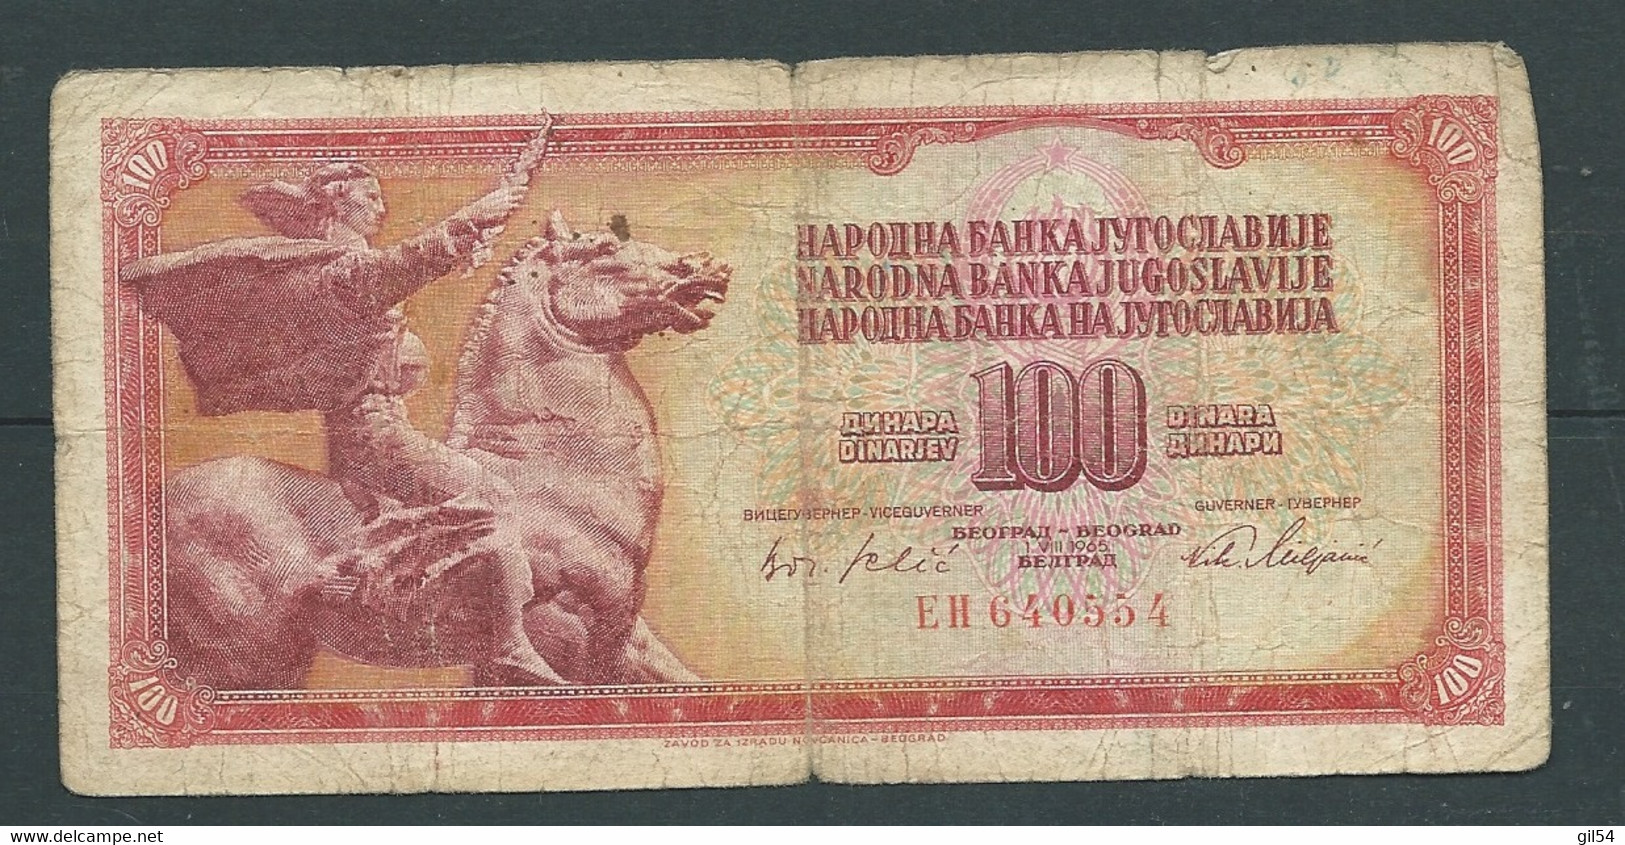 Billet Yougoslavie 100 Dinars Année 1965 EH640554 - ETAT D'USAGE   LAURA 9608 - Yugoslavia